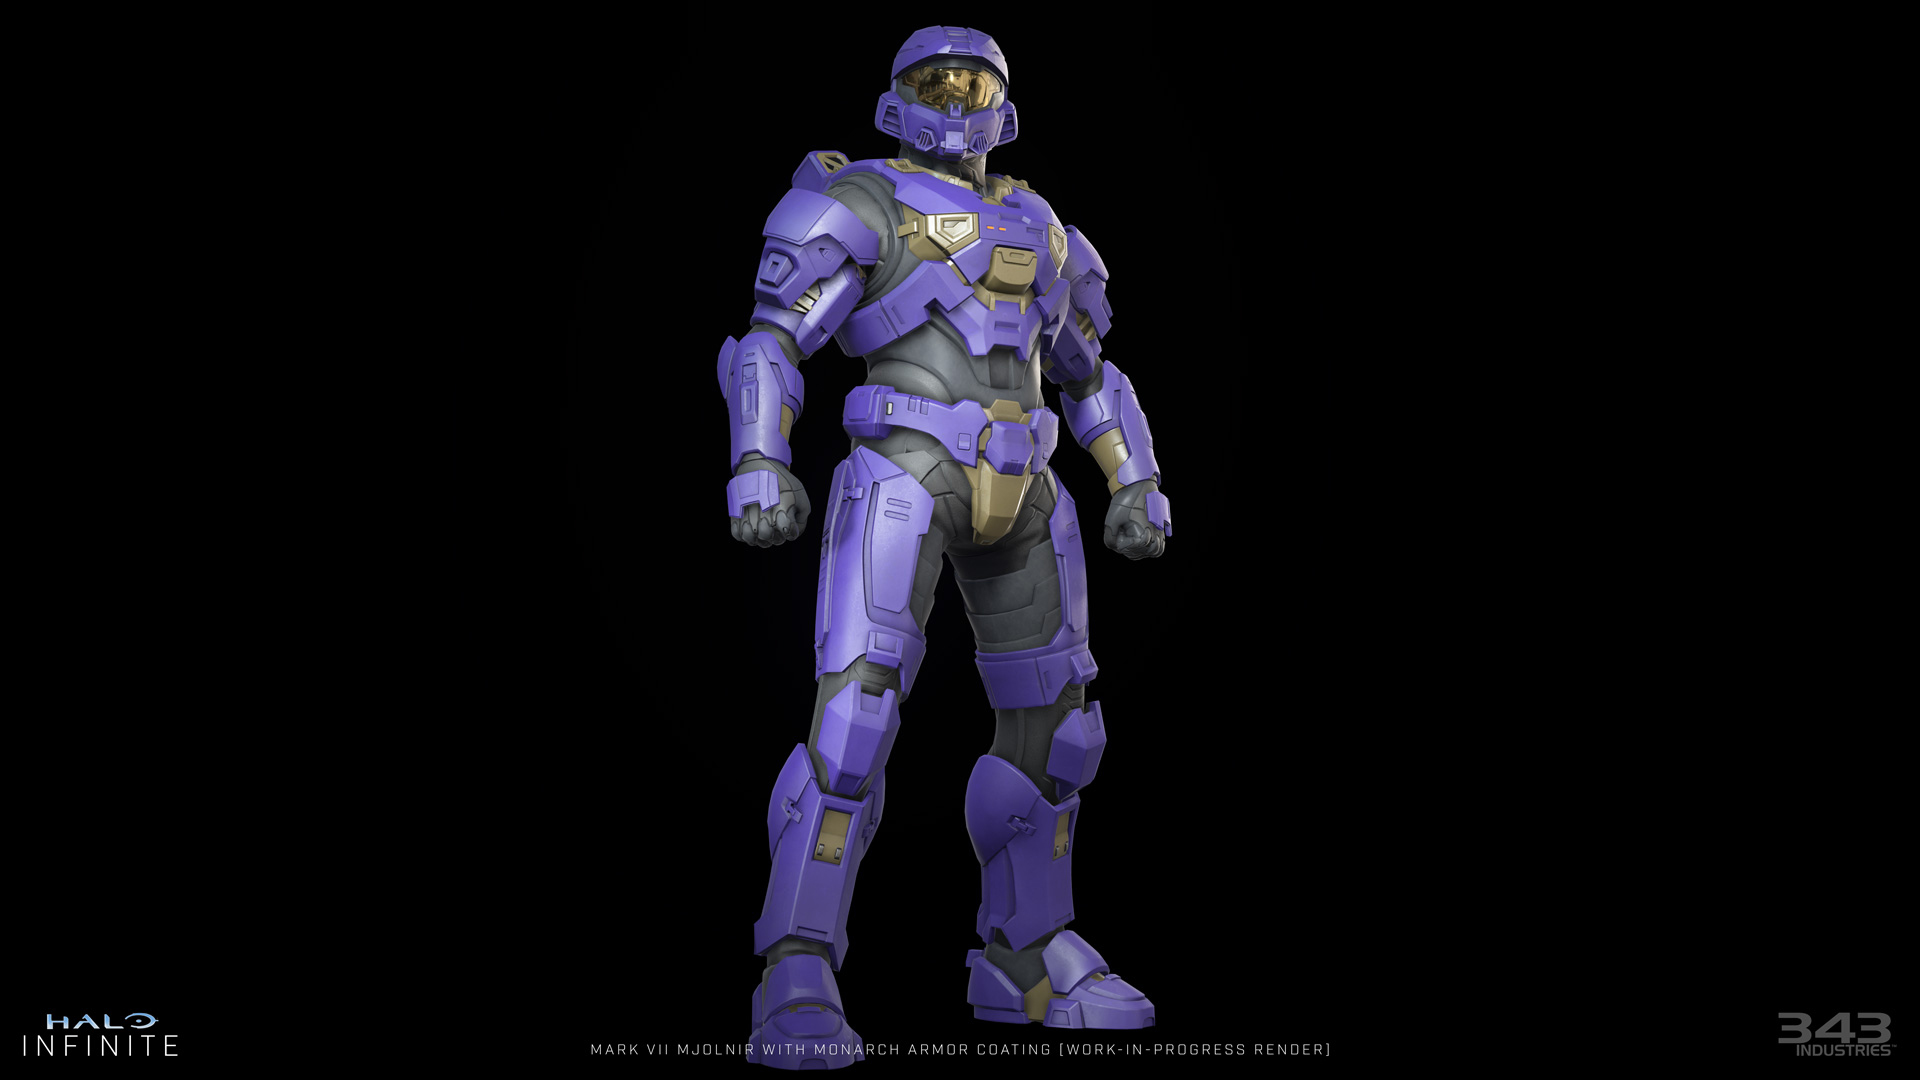 Halo Infinite Monarch armor coating